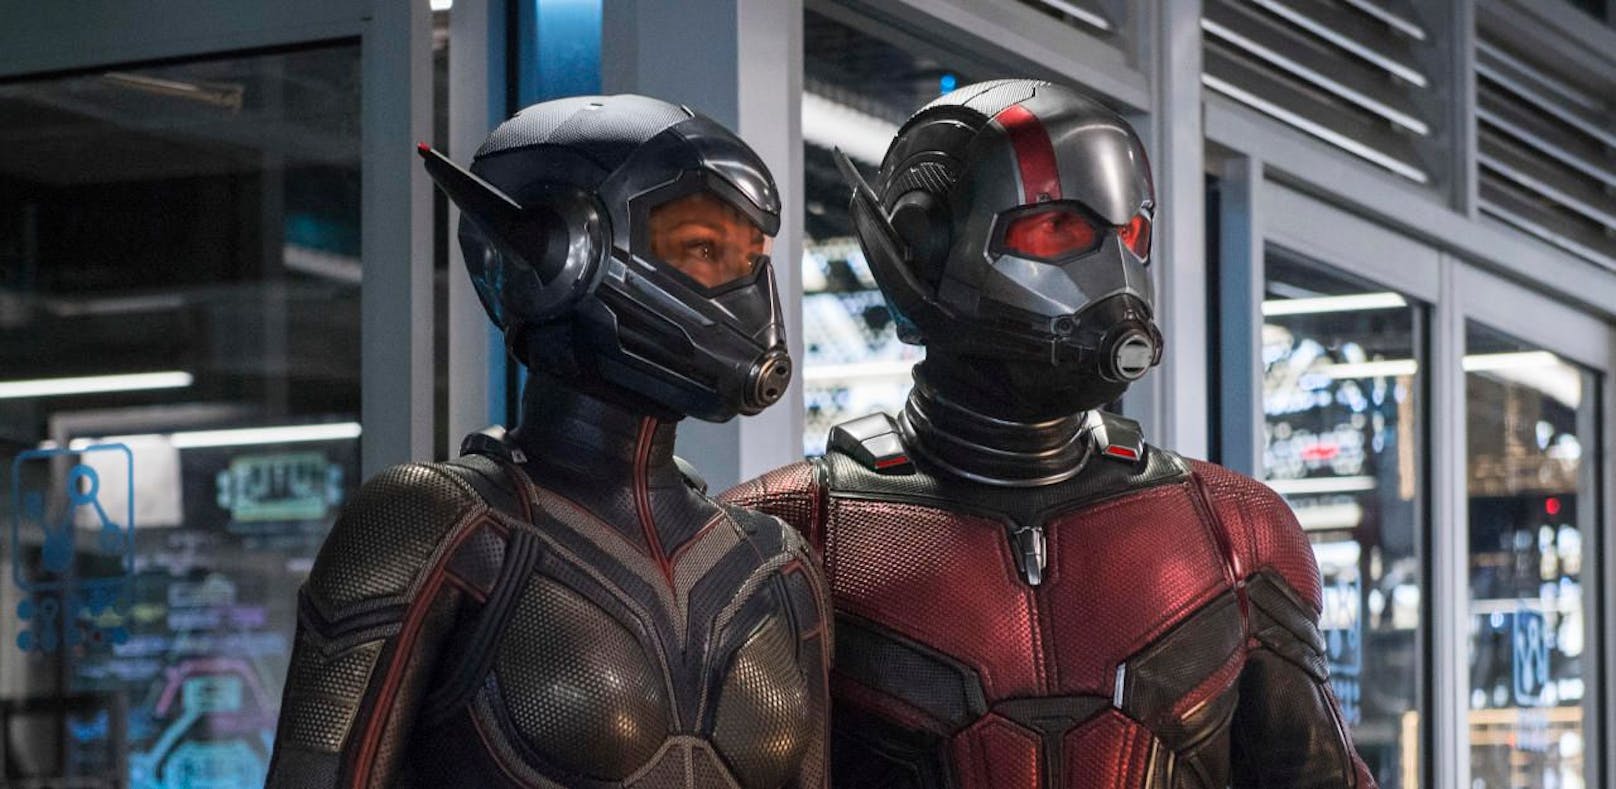 Kevin Feige bestätigt Fan-Theorie über "Ant-Man"